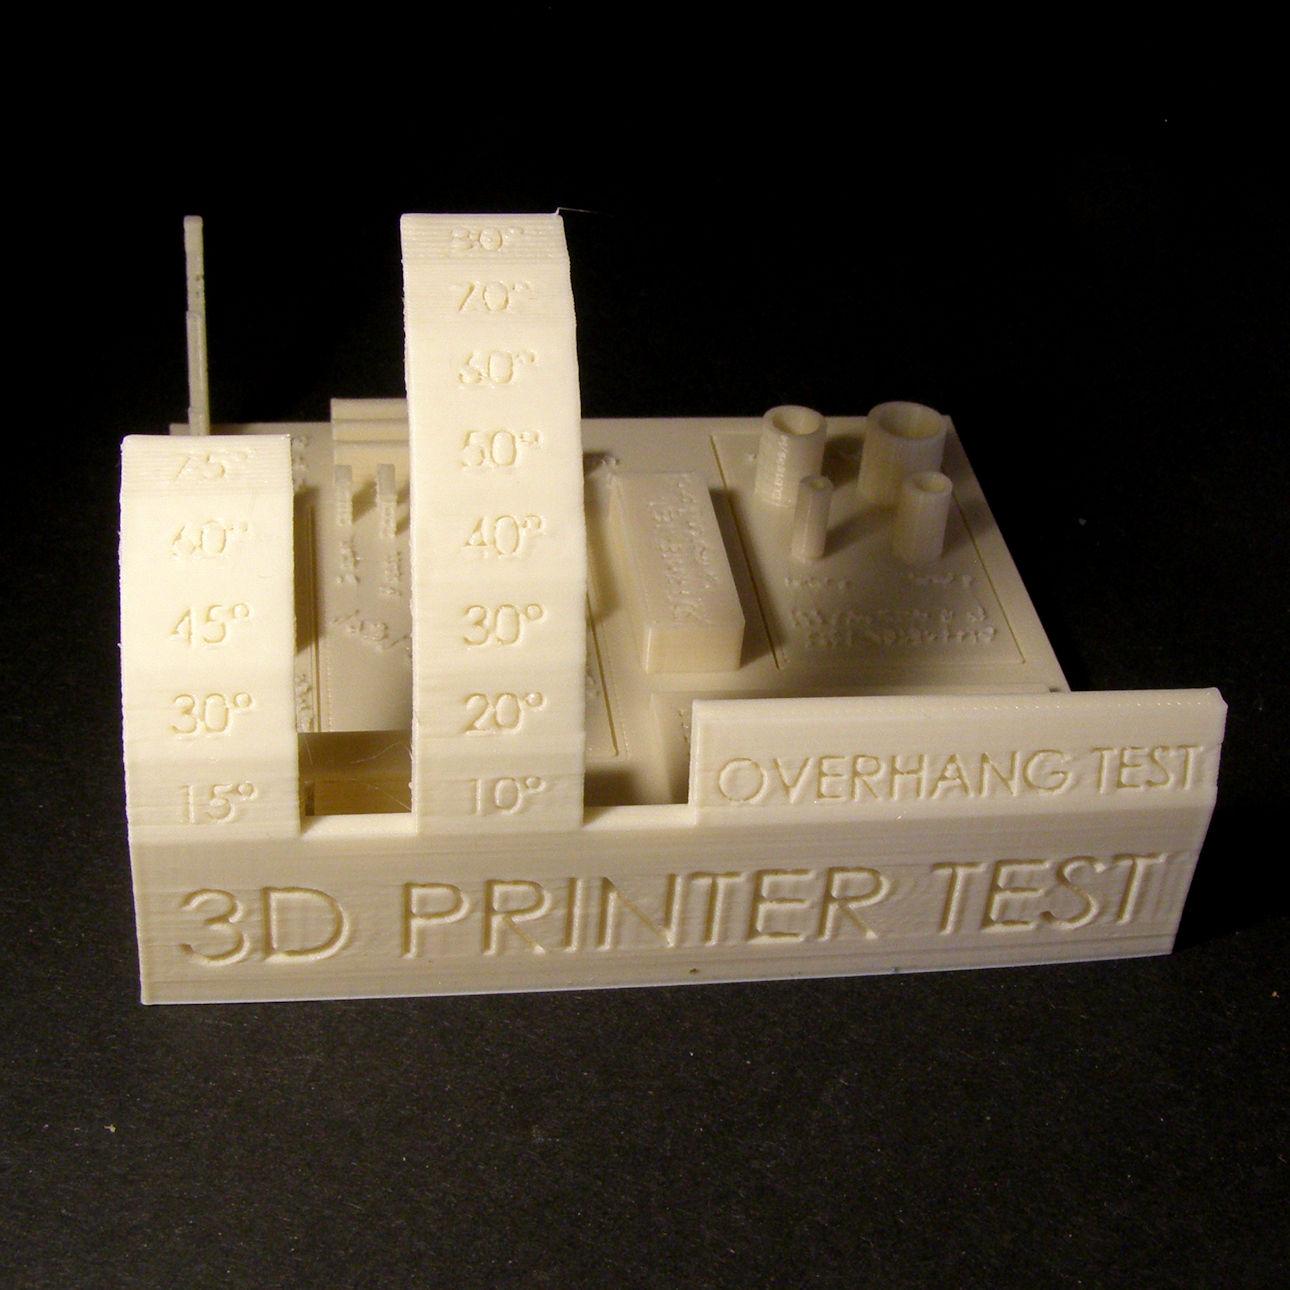 3D Printable All One printer test by Marián